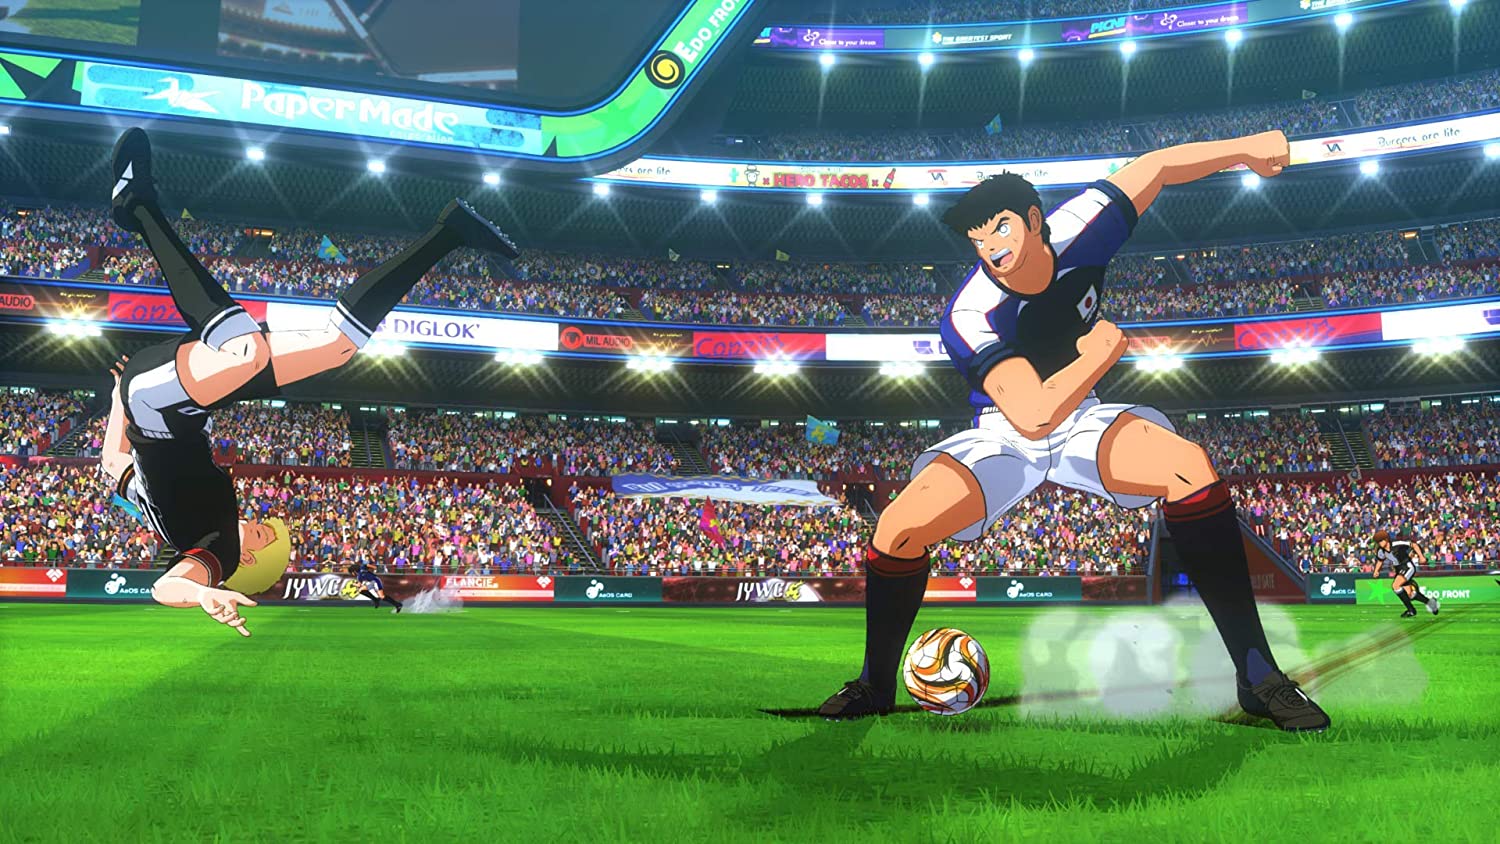 [PS4] Captain Tsubasa: Rise of New Champions